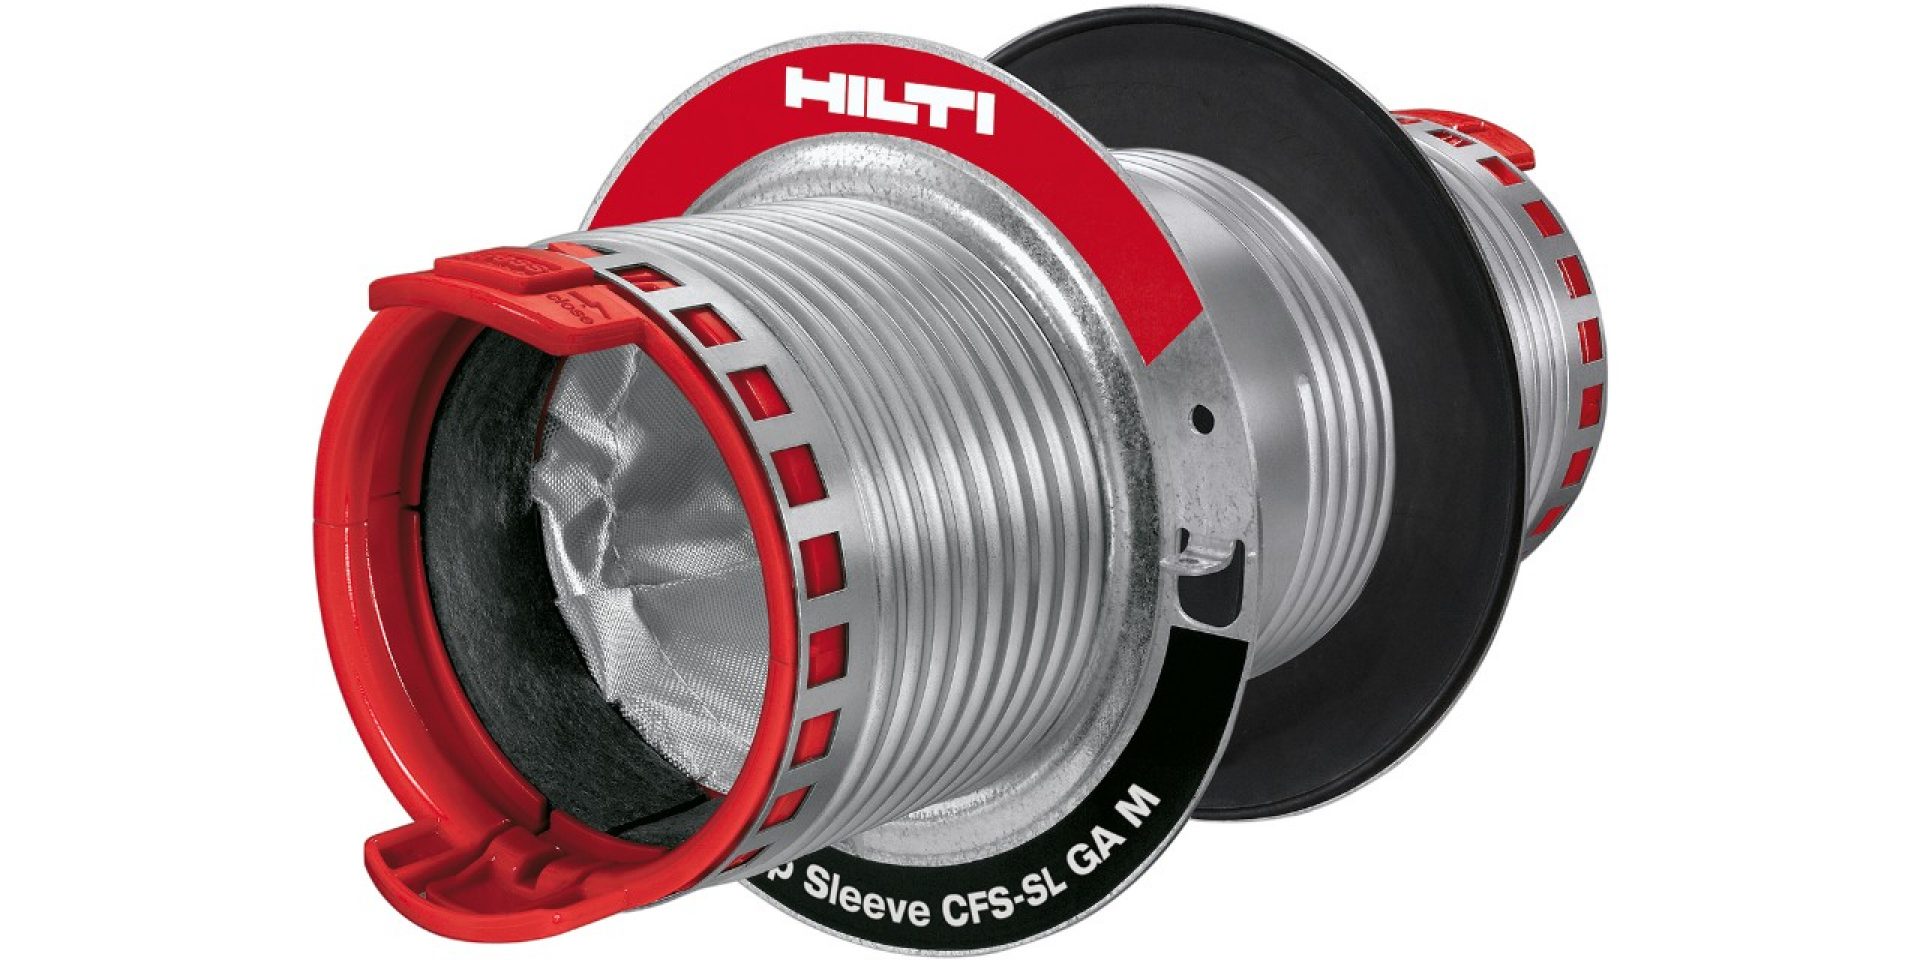 Hilti firestop sleeves CP 653